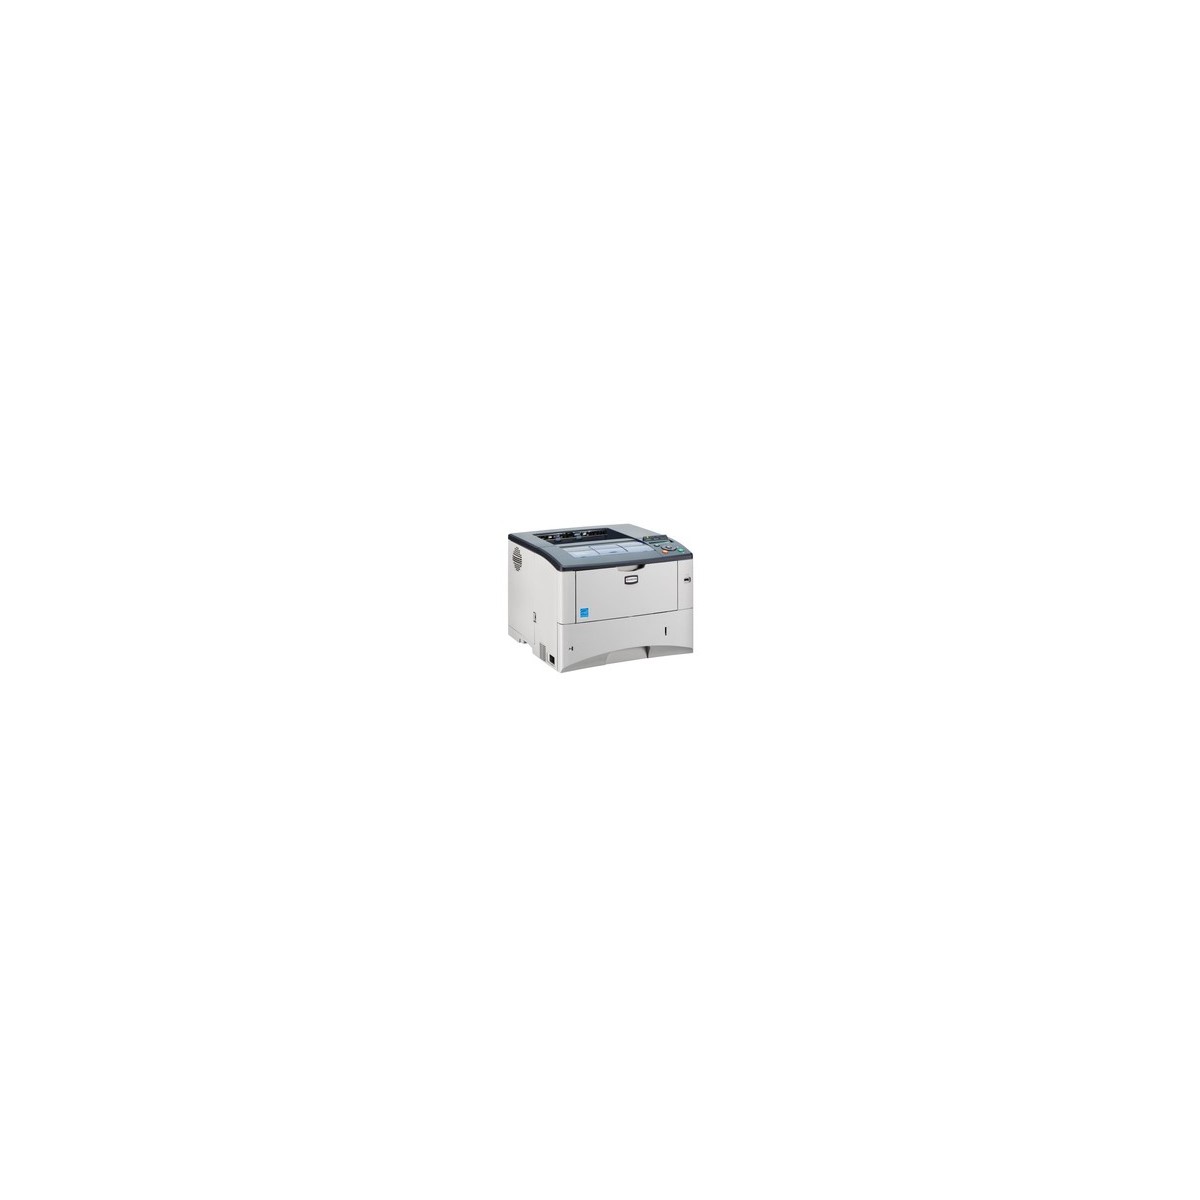 Kyocera FS FS-2020D - Printer b-w Laser-Led - 1,200 dpi - 35 ppm